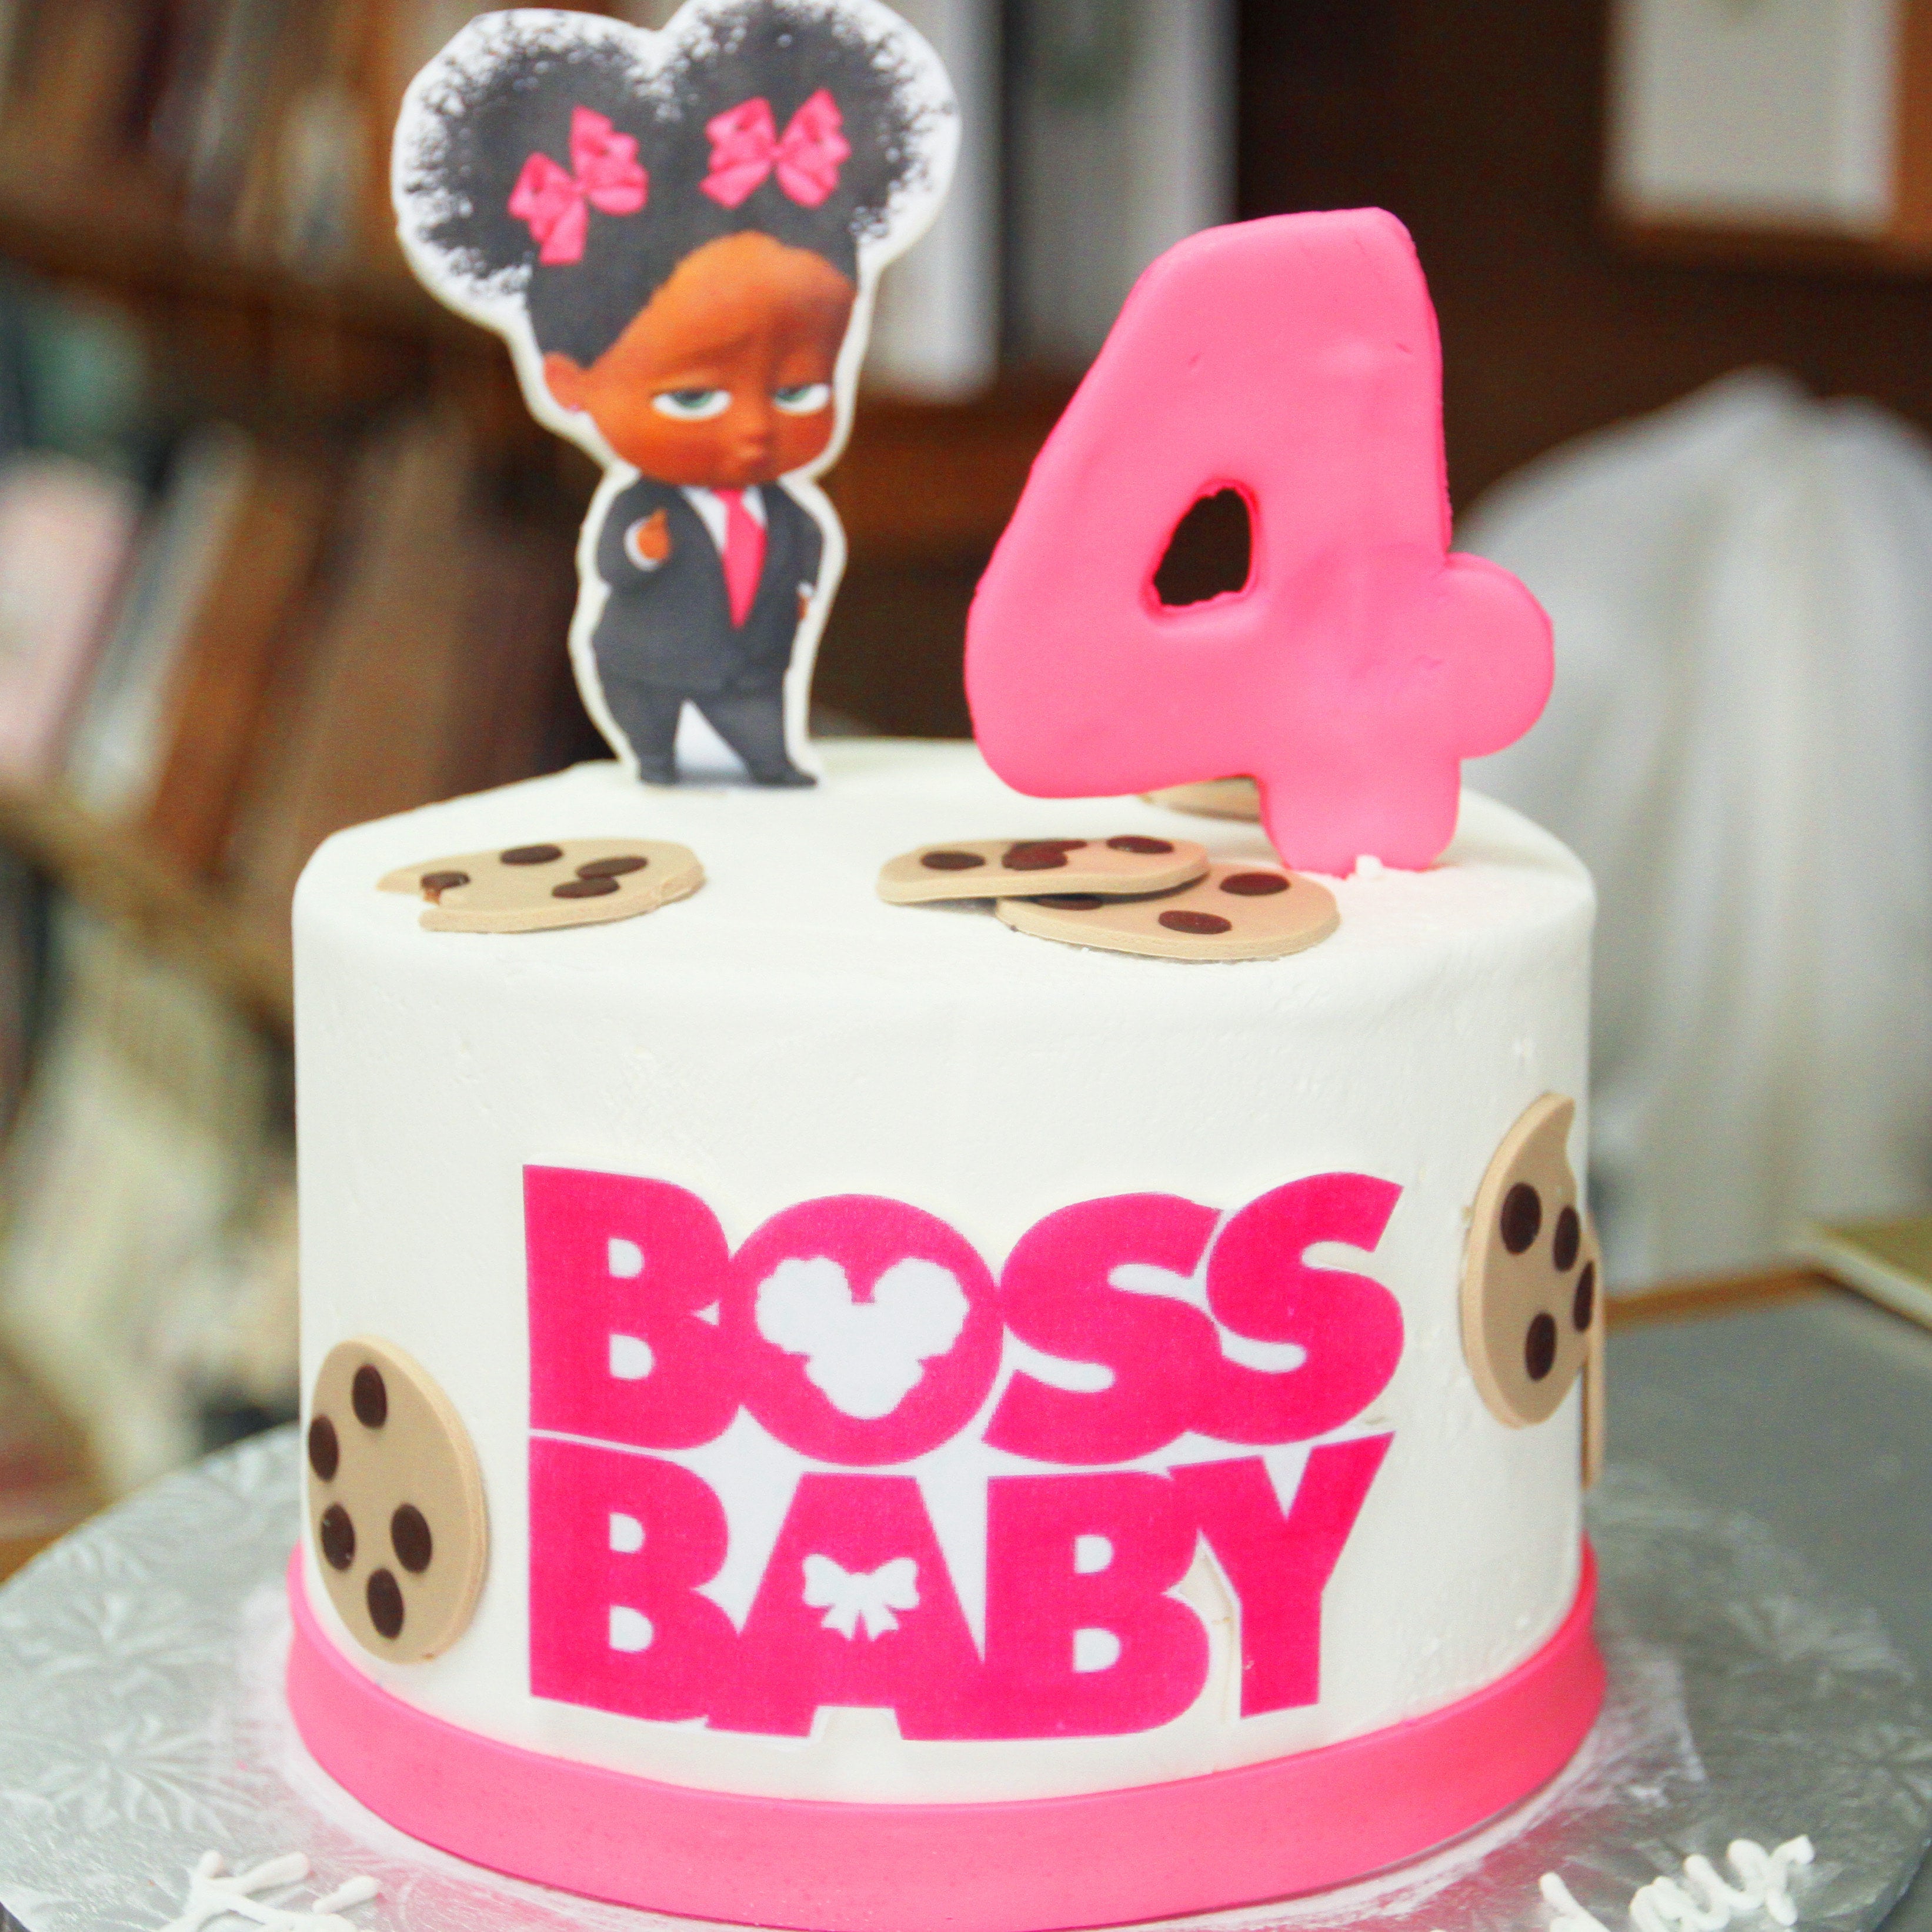 Shopaholic, Born to Shop Theme Cakes and Cupcakes - Cakes and Cupcakes  Mumbai